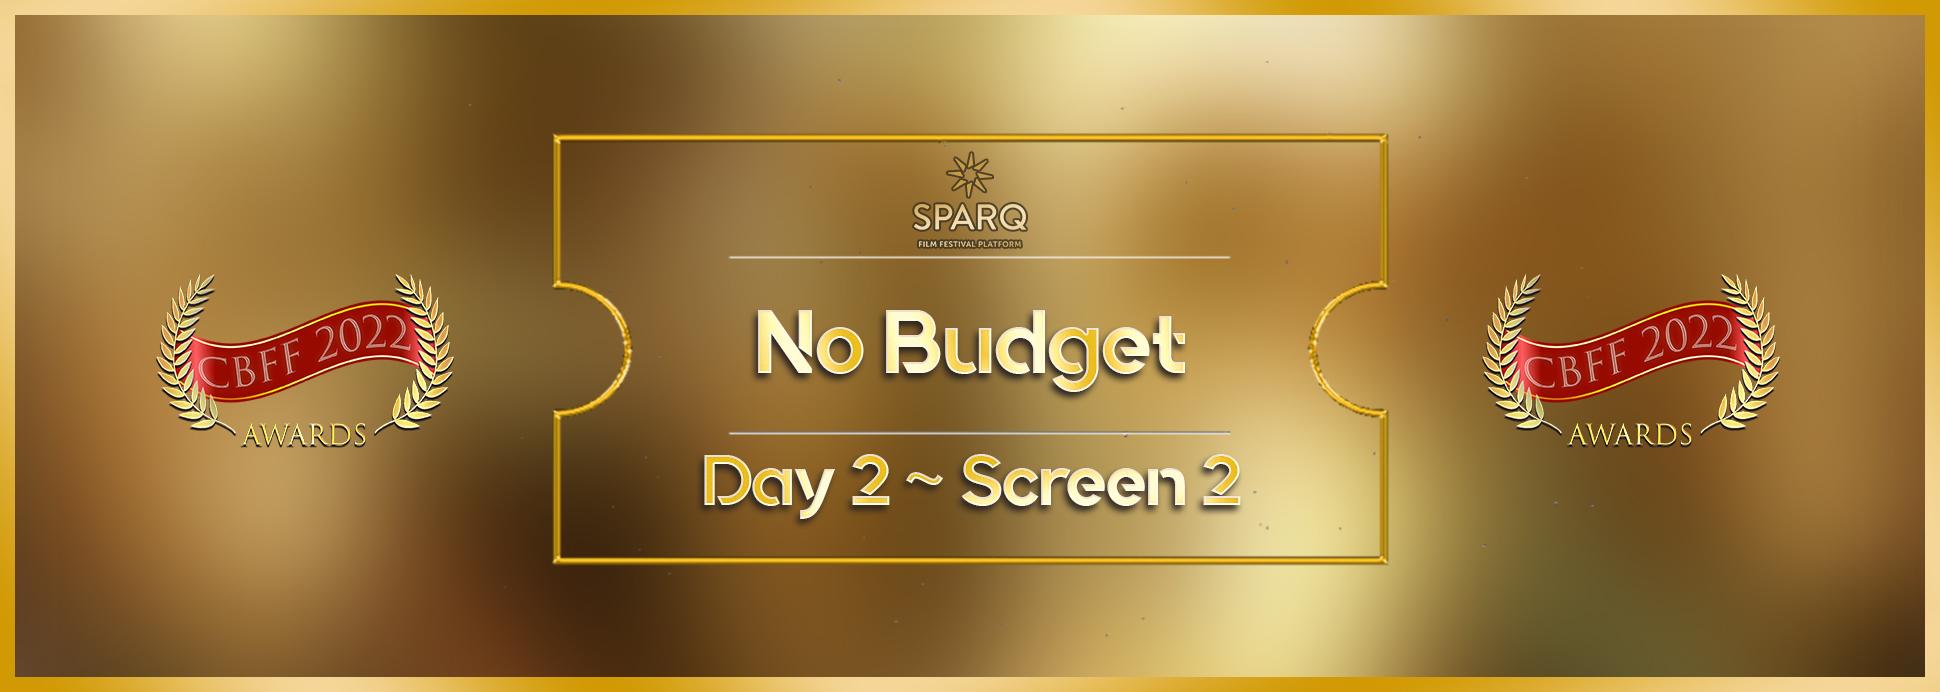 Day 2 Screen 2 No Budget Short Film